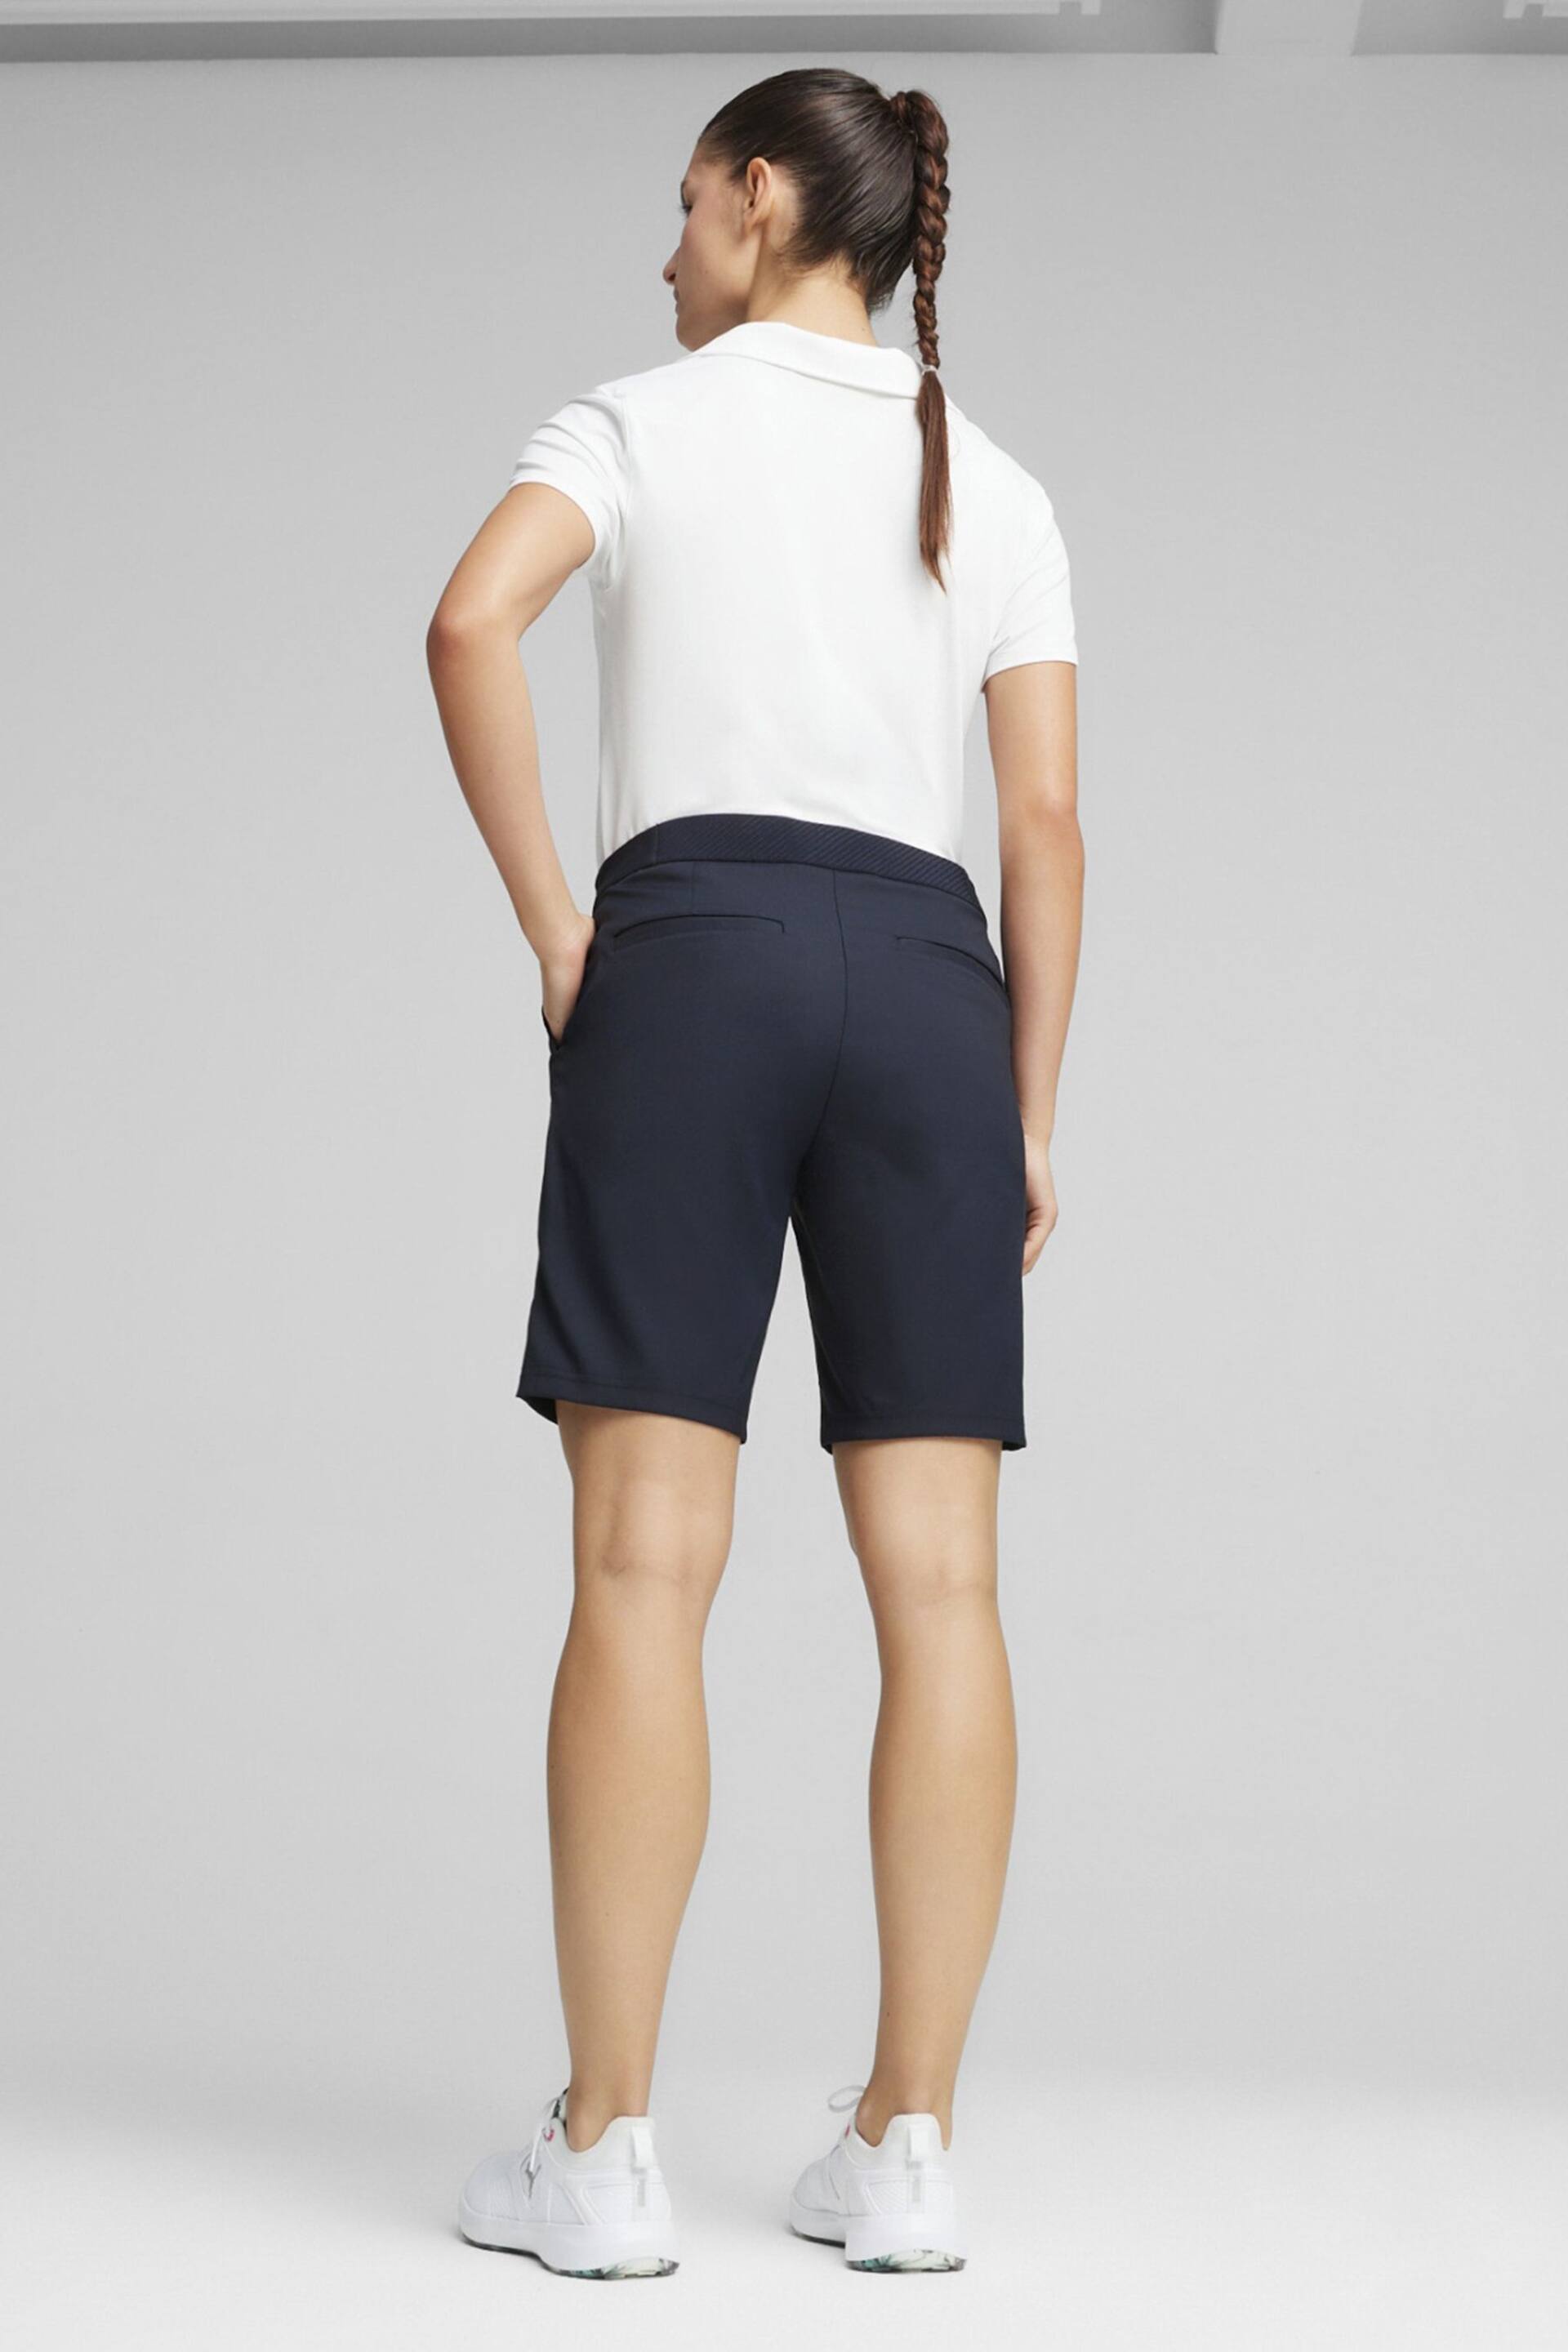 Puma Blue W Costa 8.5" Womens Golf Shorts - Image 2 of 6